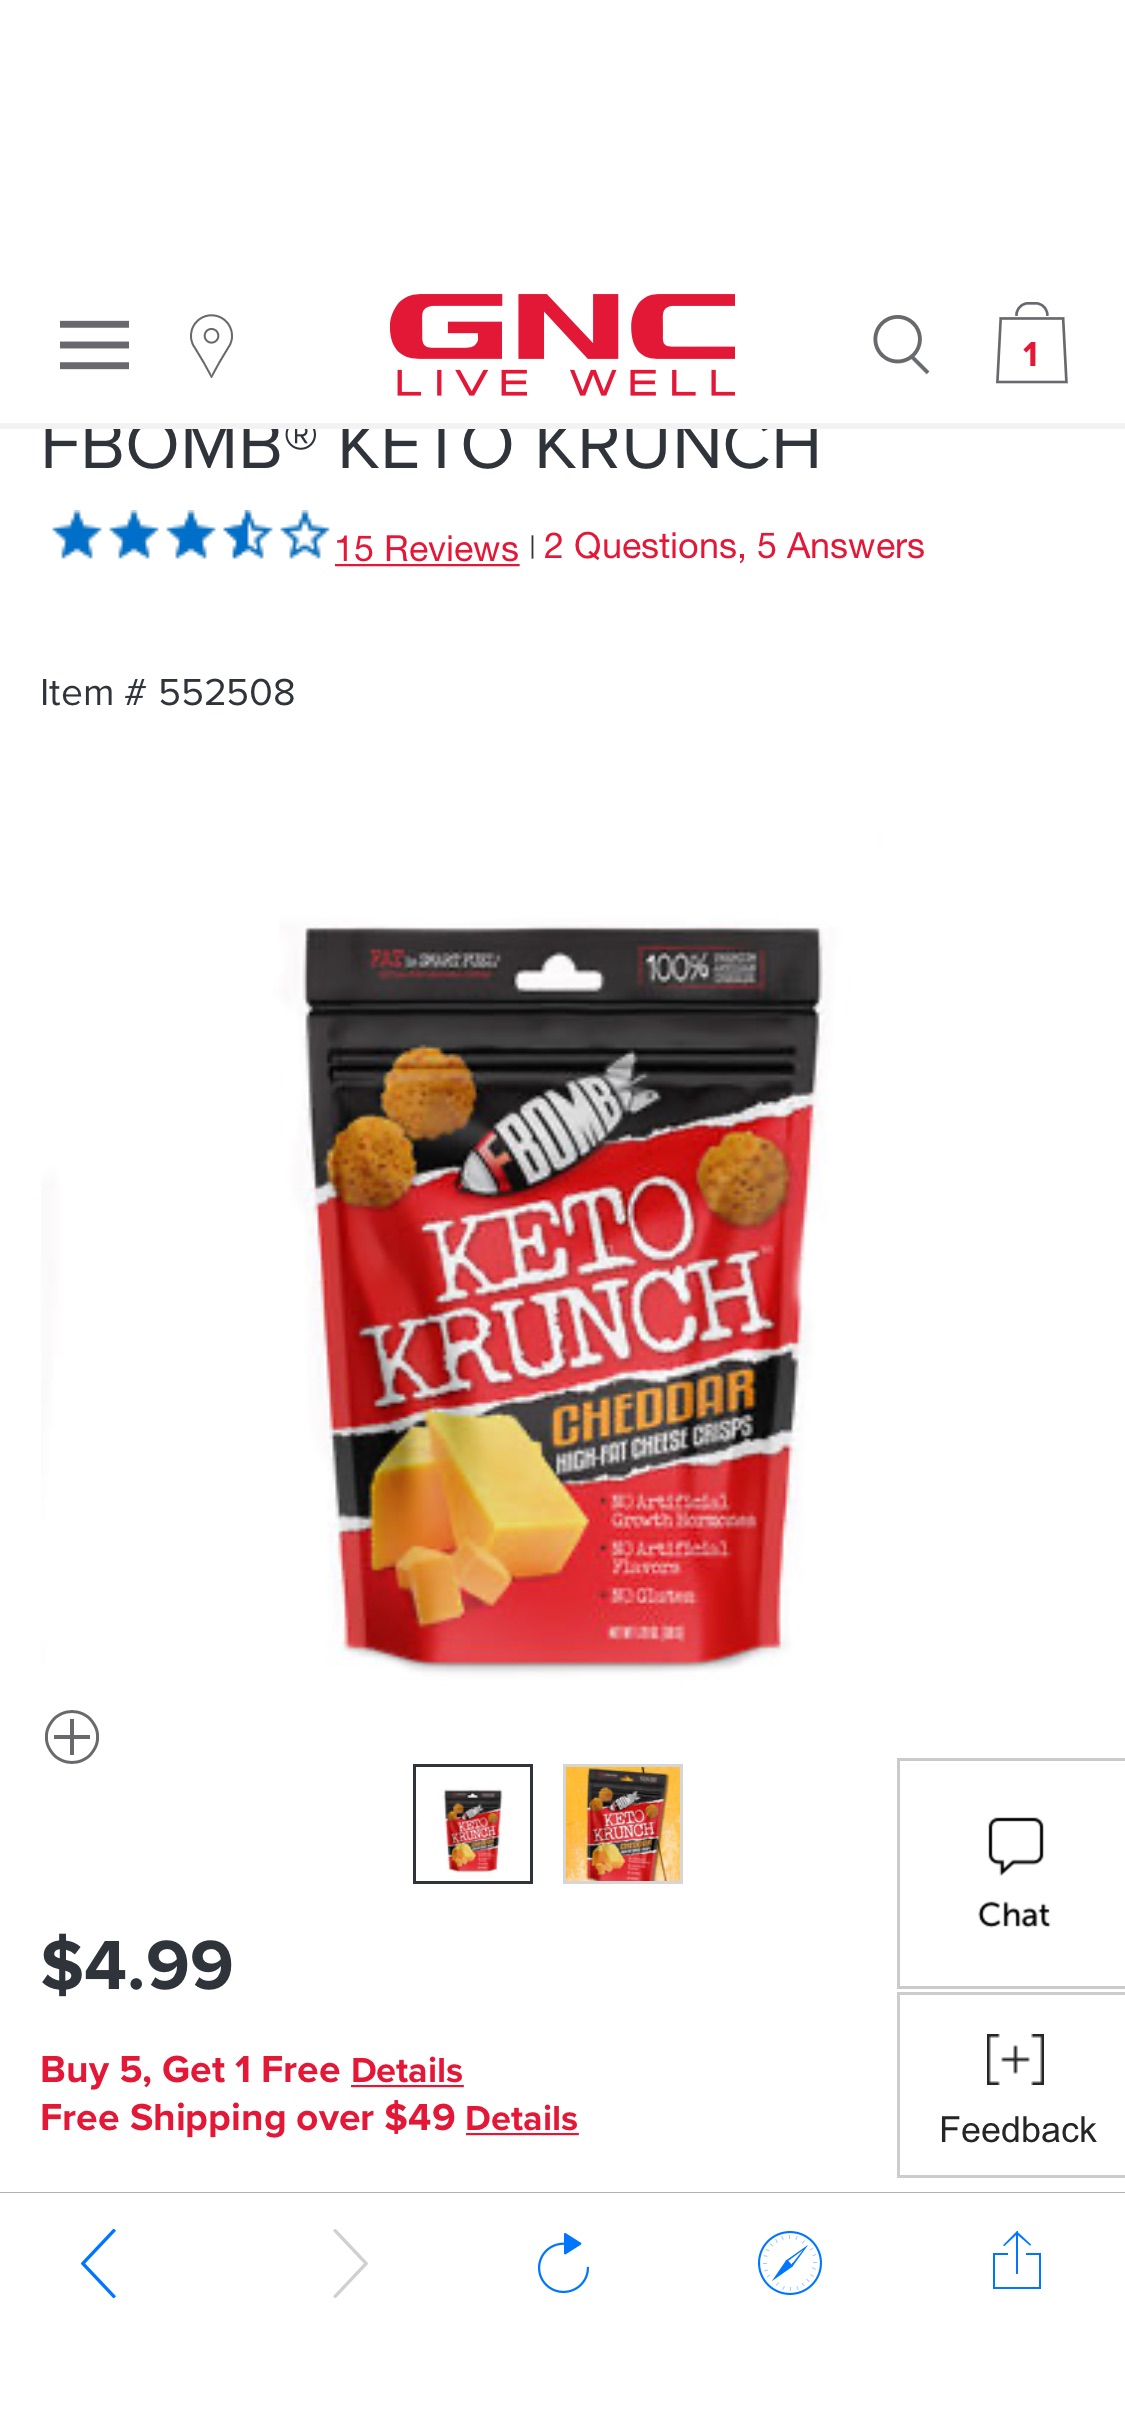 GNC /FBOMB® Keto Krunch -切达奶酪脆片